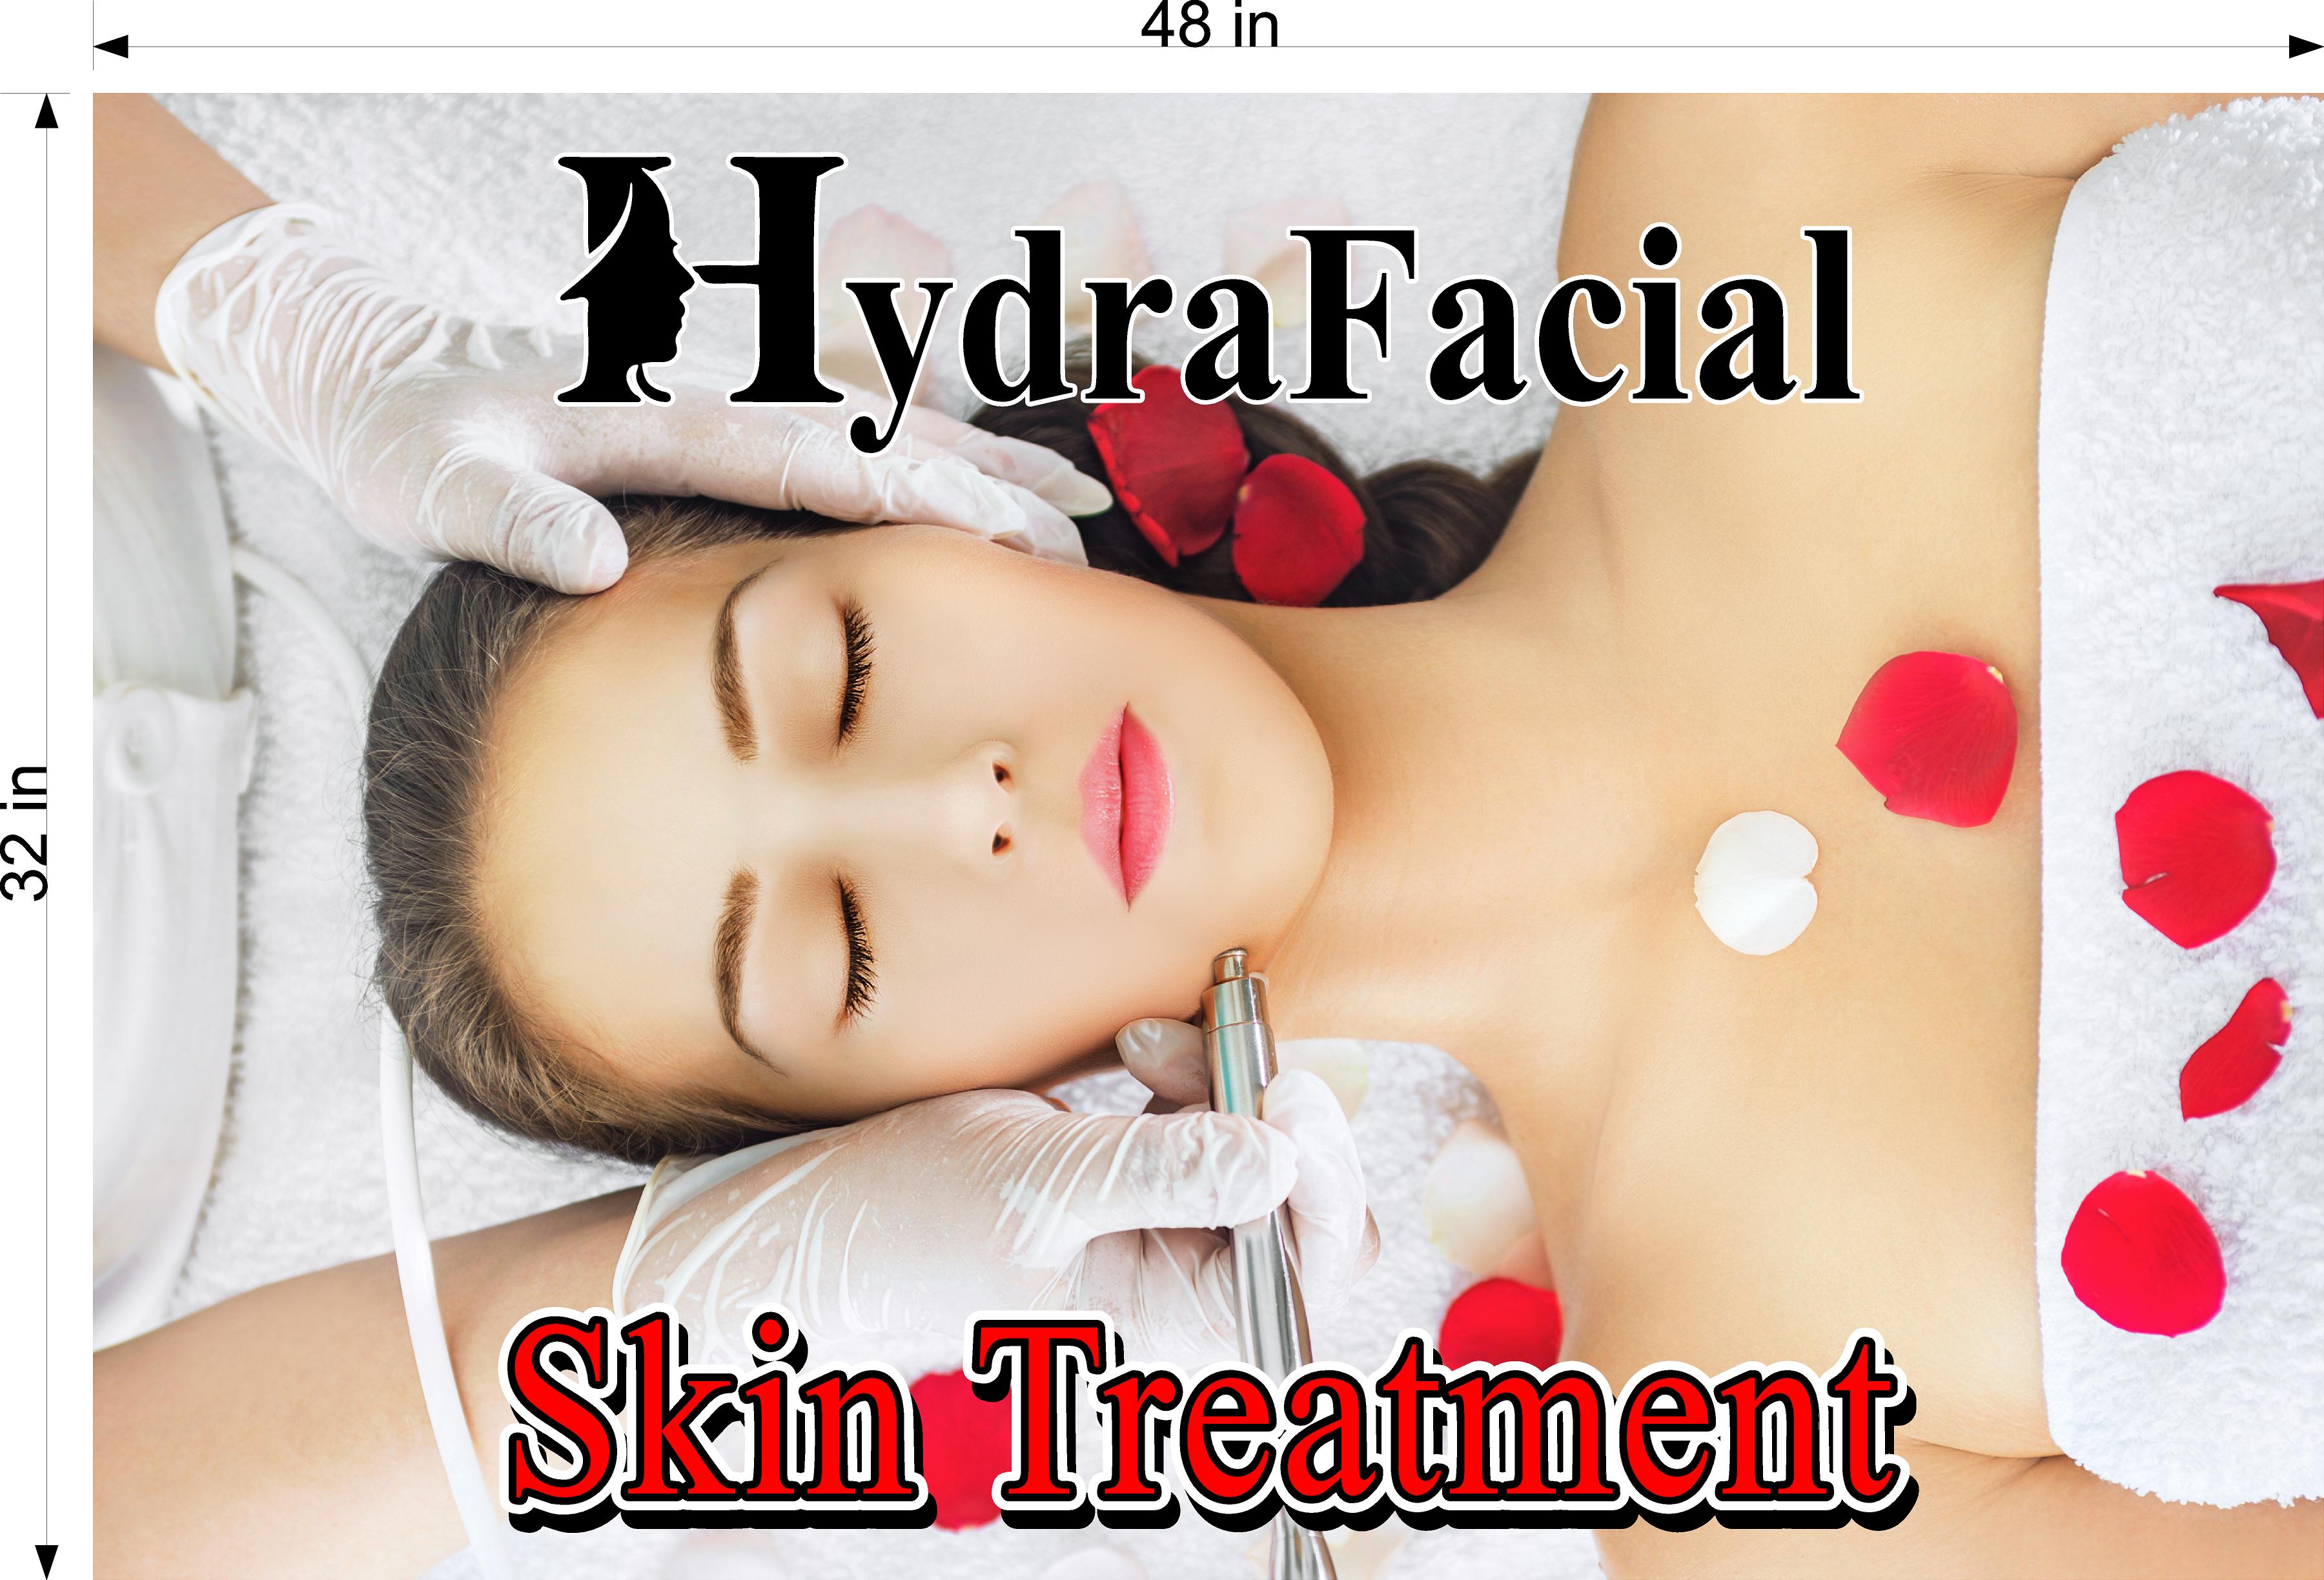 Salon 29 Photo-Realistic Paper Poster Premium Interior Inside Sign Wall Window Non-Laminated HydraFacial Skin Treatment Horizontal